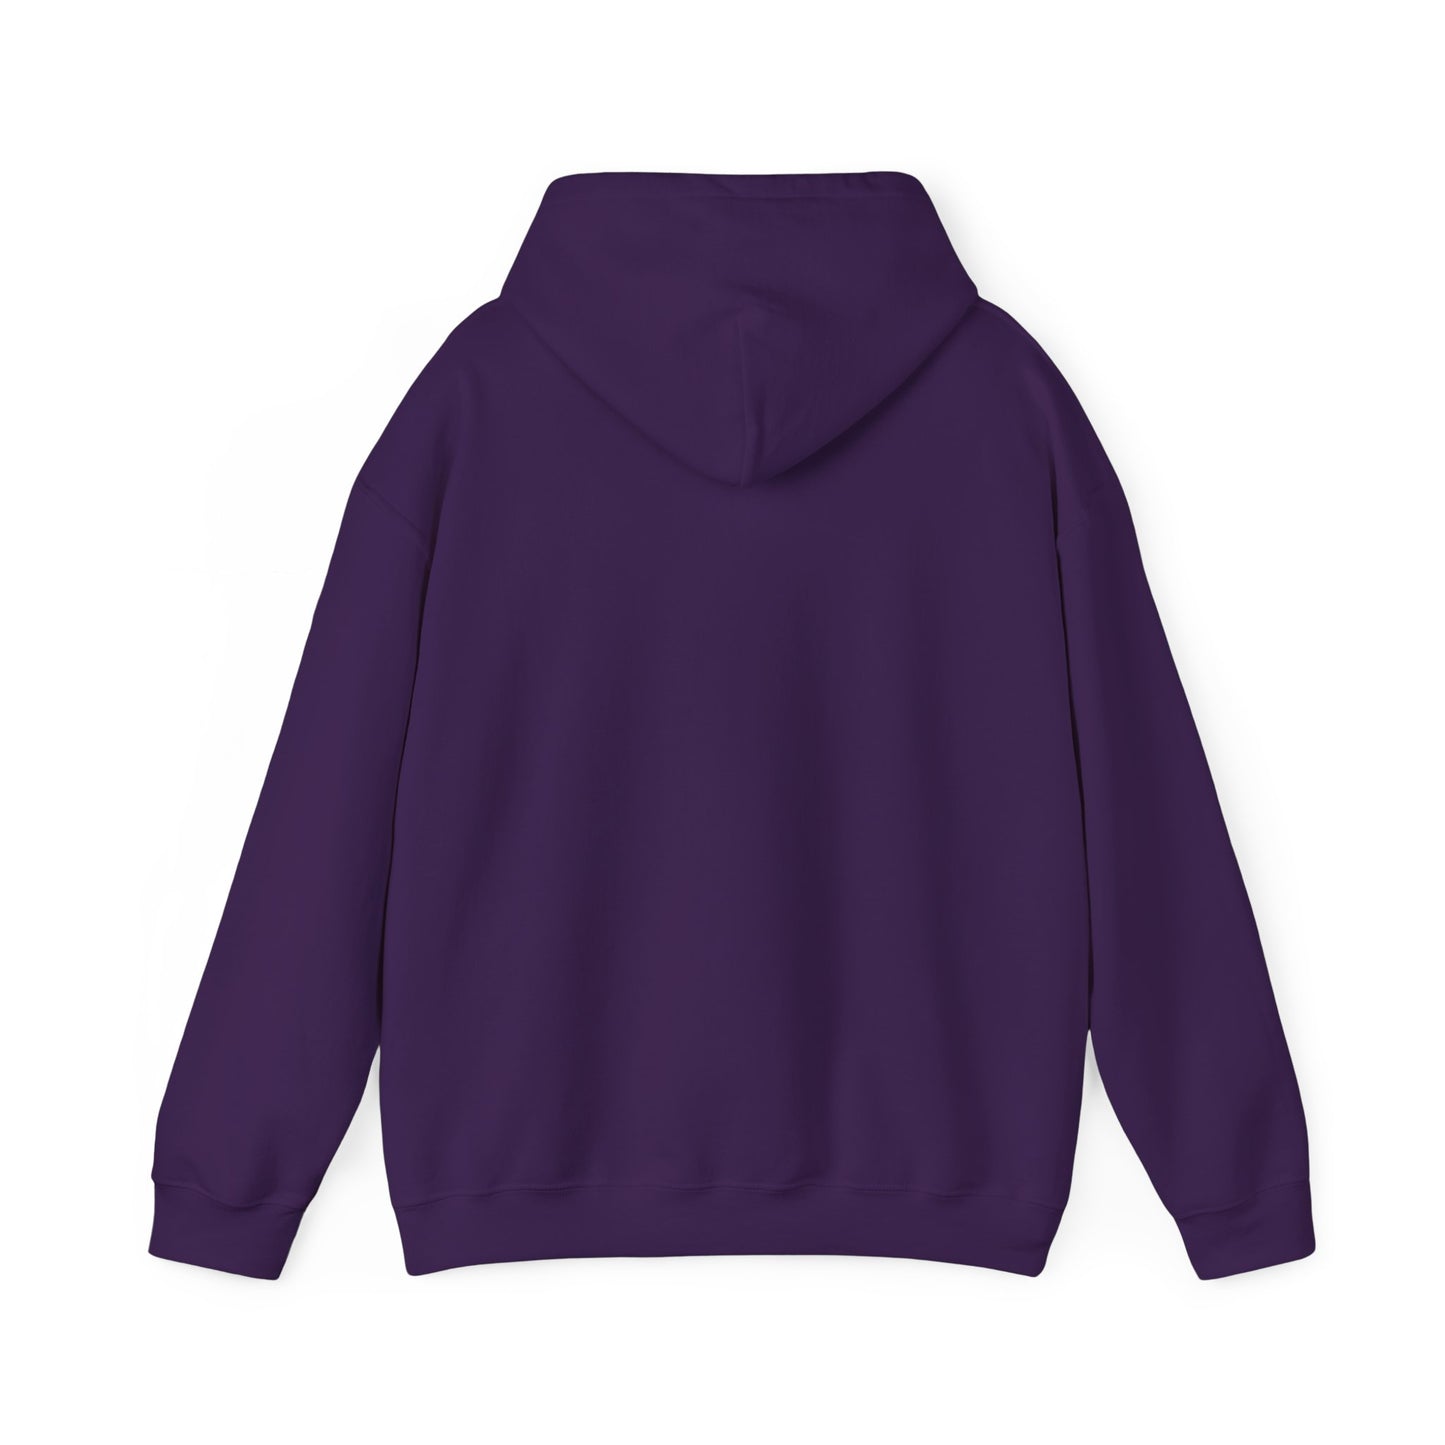 INSPIRED RAISE YOUR STANDARDS Unisex Heavy Blend™ Hooded Sweatshirt